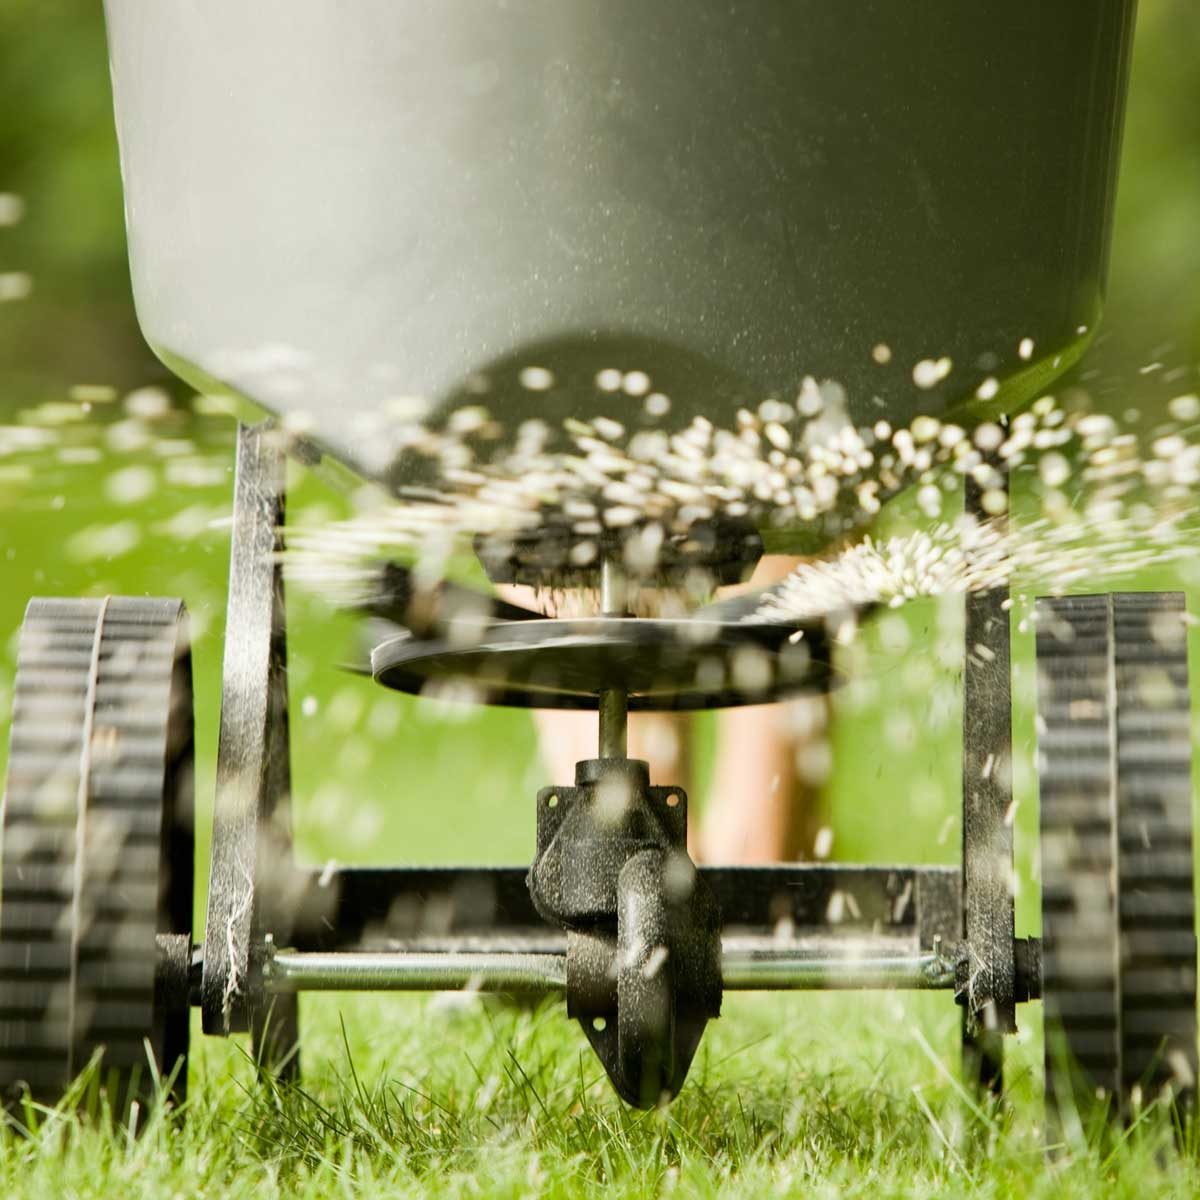 Should You Use Winter Fertilizer?